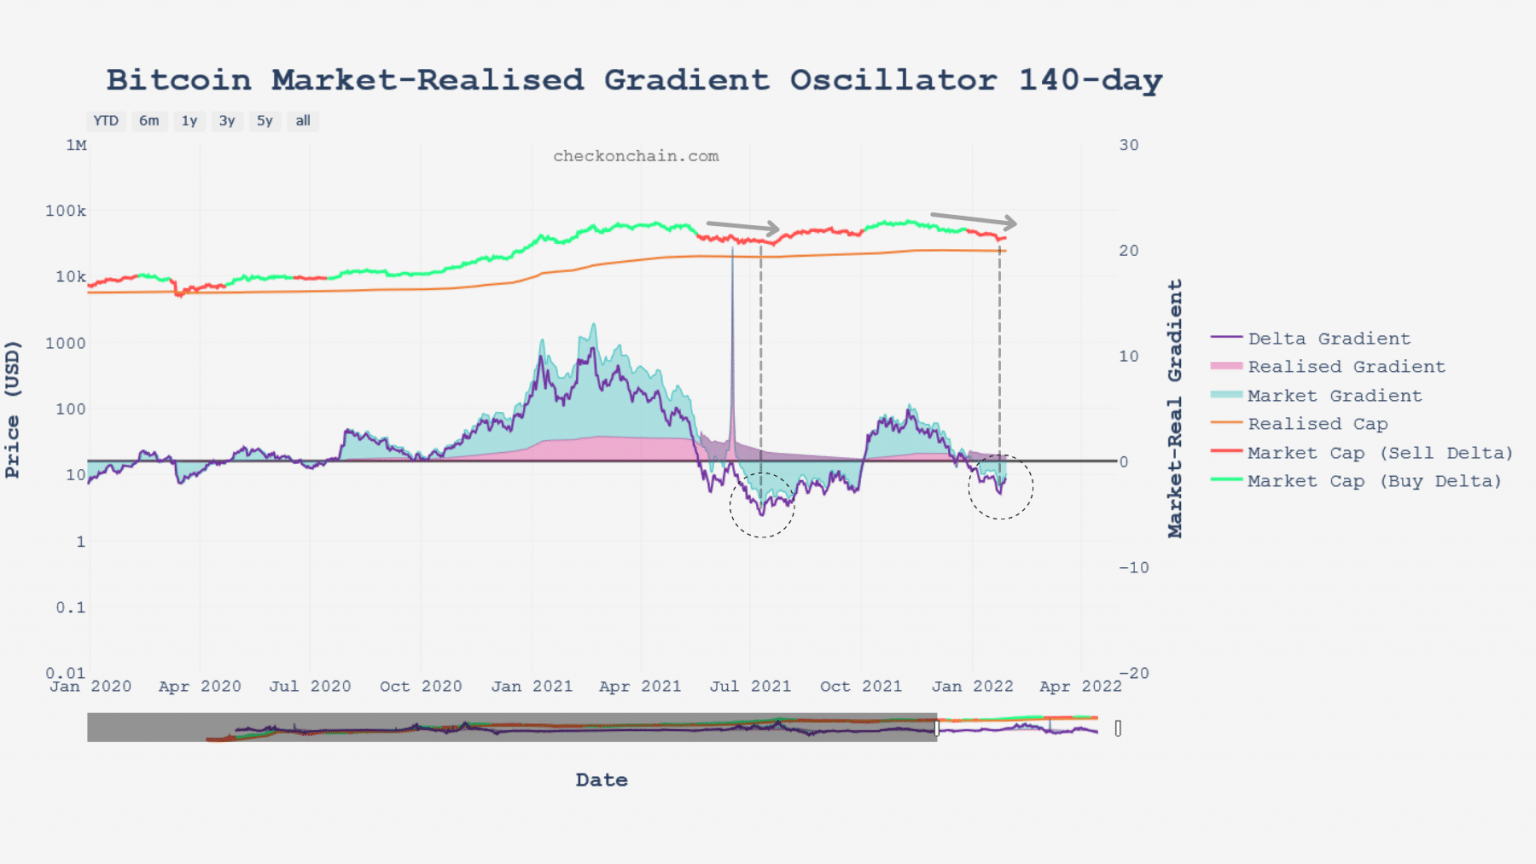 MRG-140 chart of bitcoin